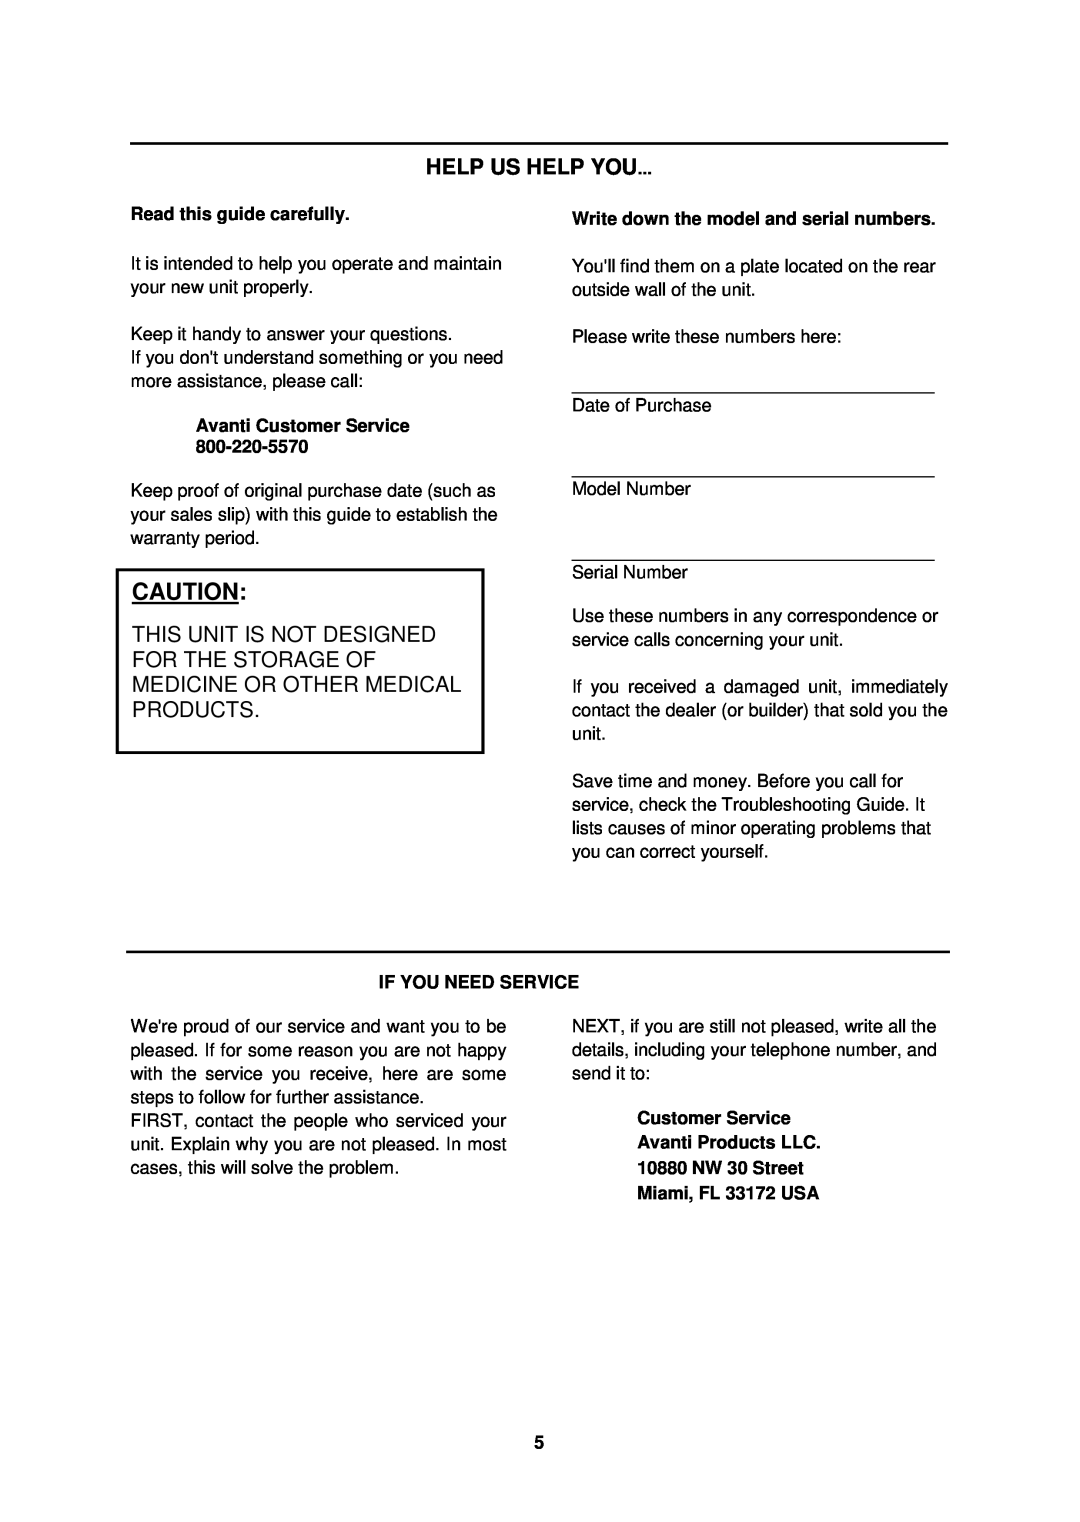 Avanti BCA193BG-1 Help Us Help You, Read this guide carefully, Avanti Customer Service, If You Need Service 